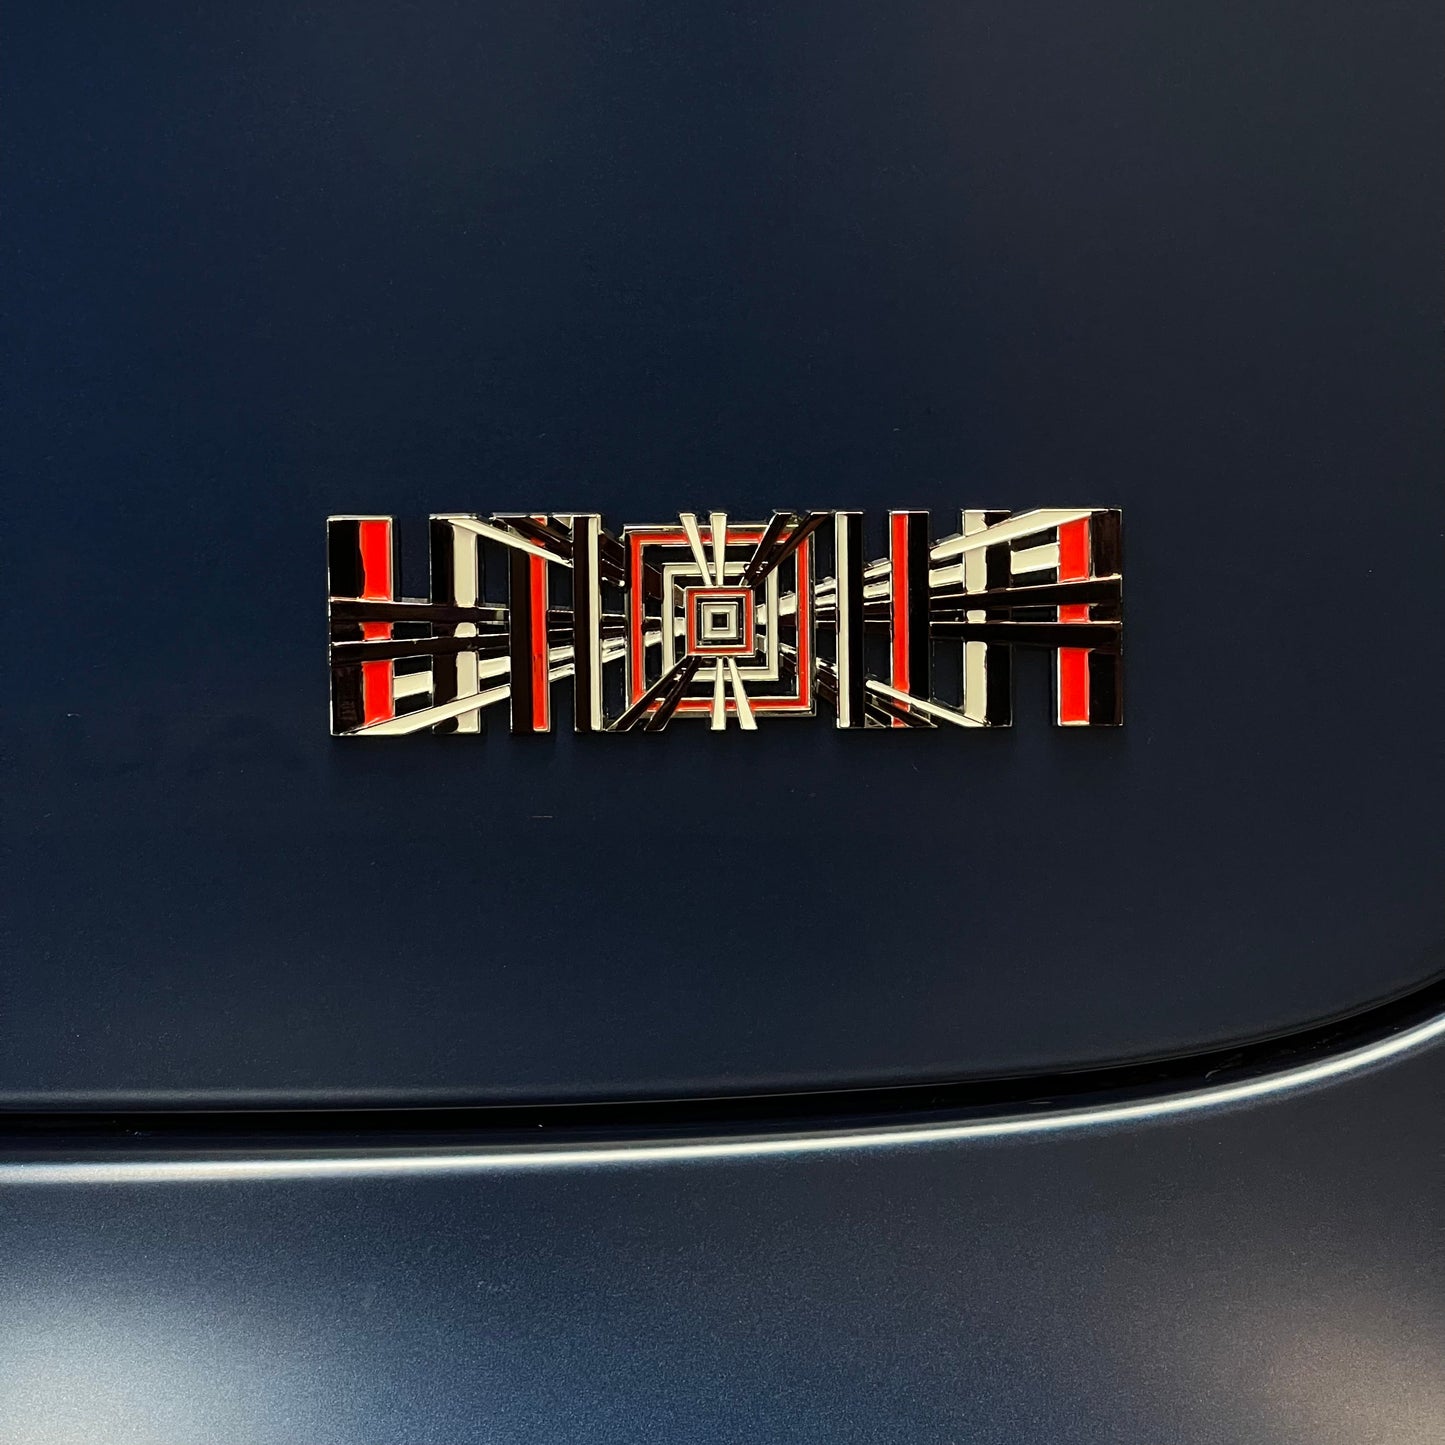 Tesla Plaid emblem